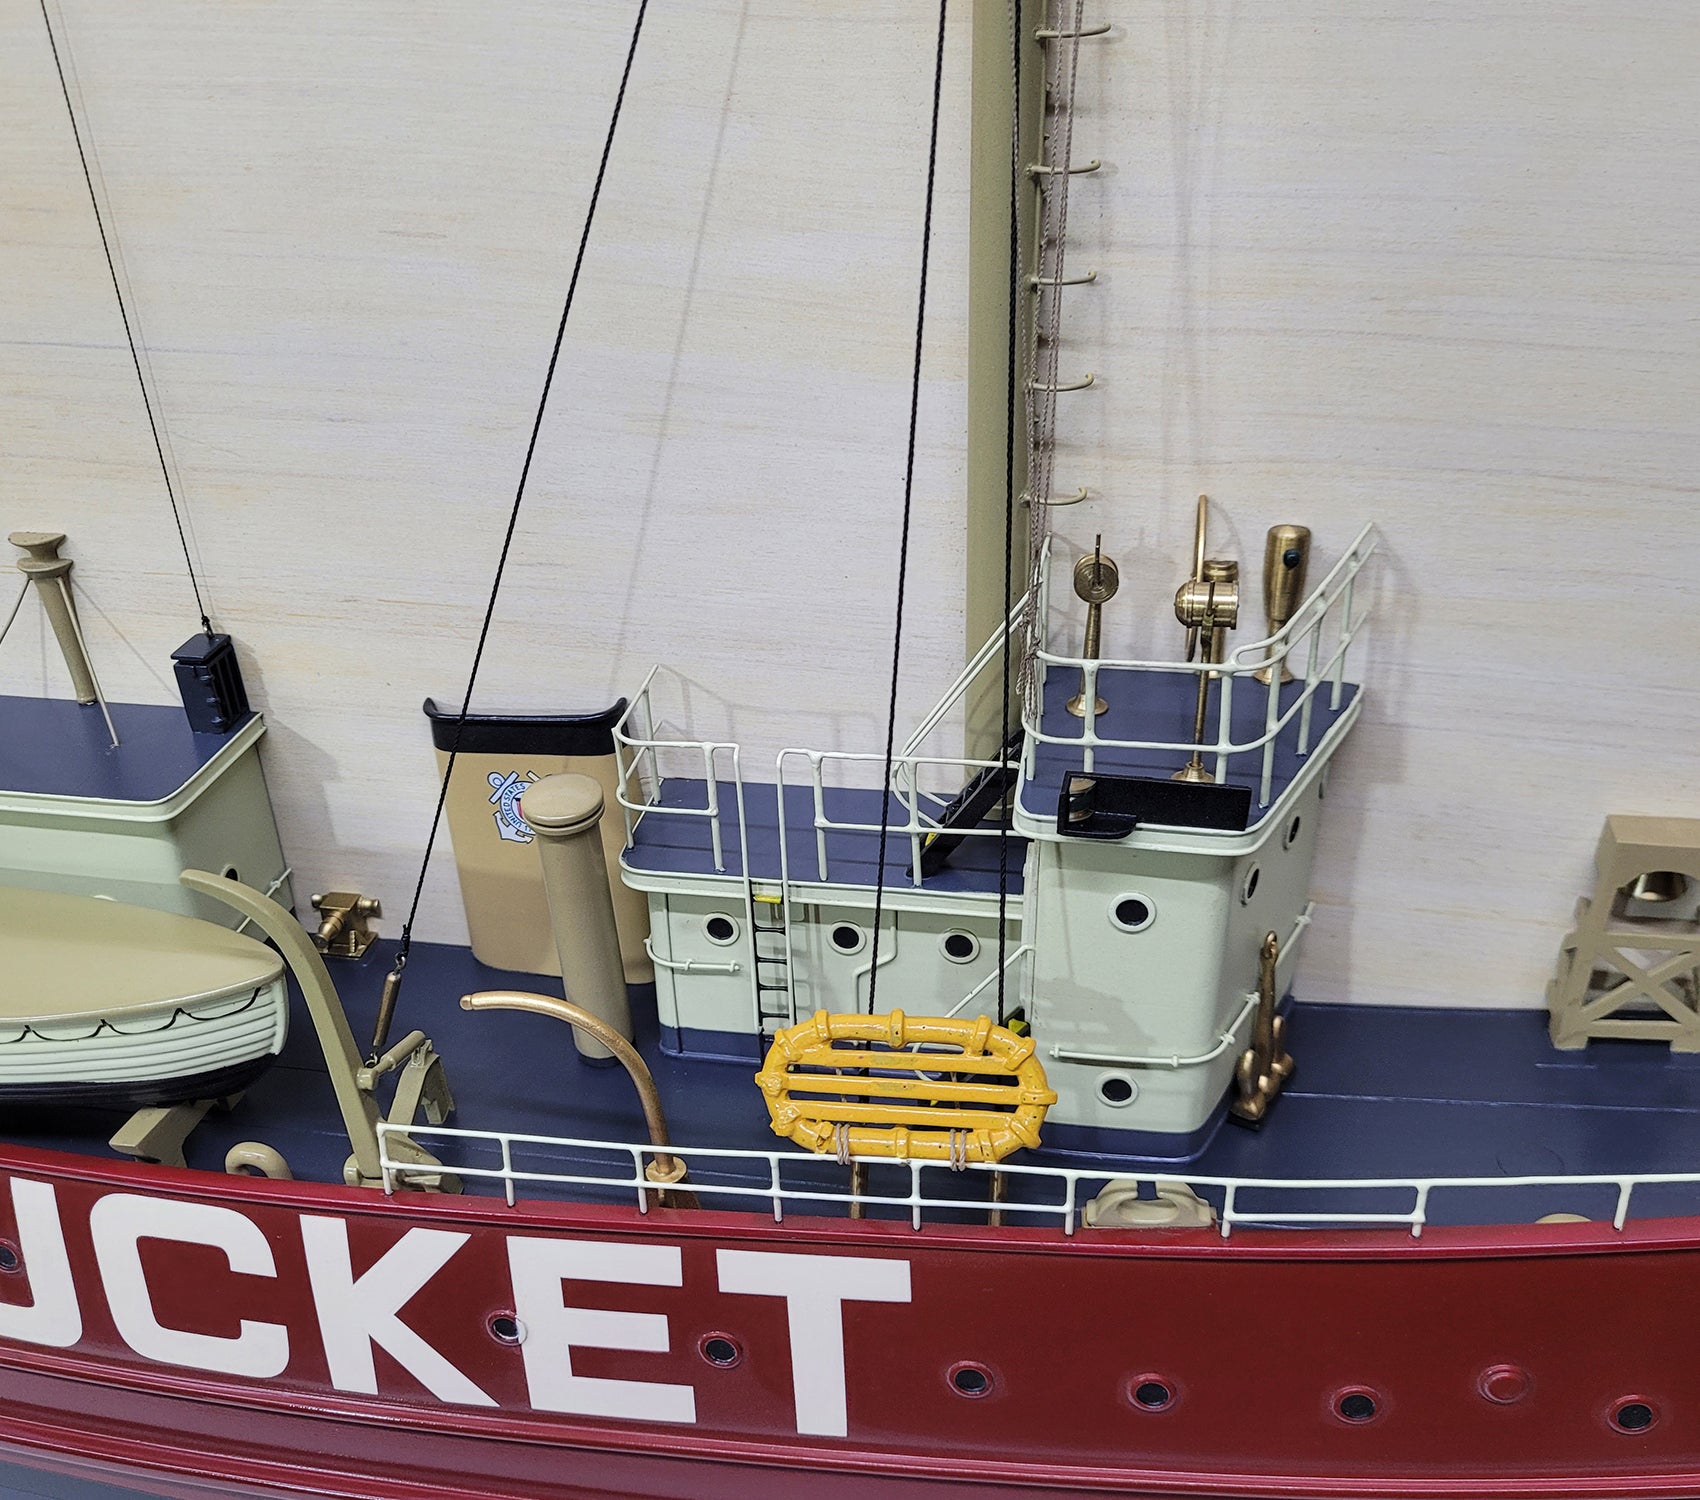 Four Foot Model of Nantucket Lightship at 1stDibs